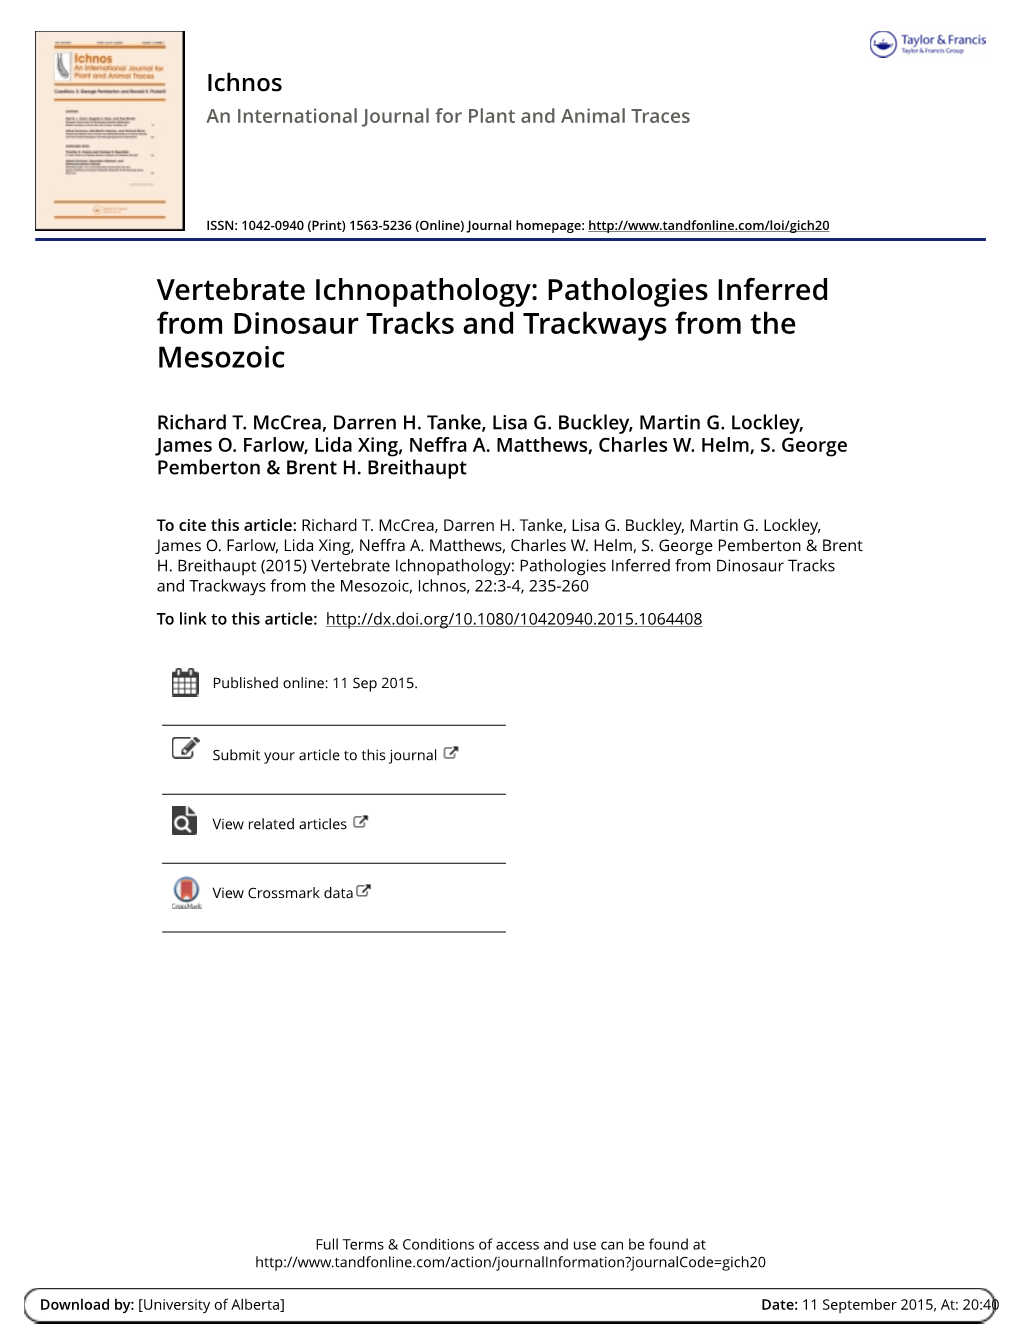 Vertebrate Ichnopathology: Pathologies Inferred from Dinosaur Tracks and Trackways from the Mesozoic